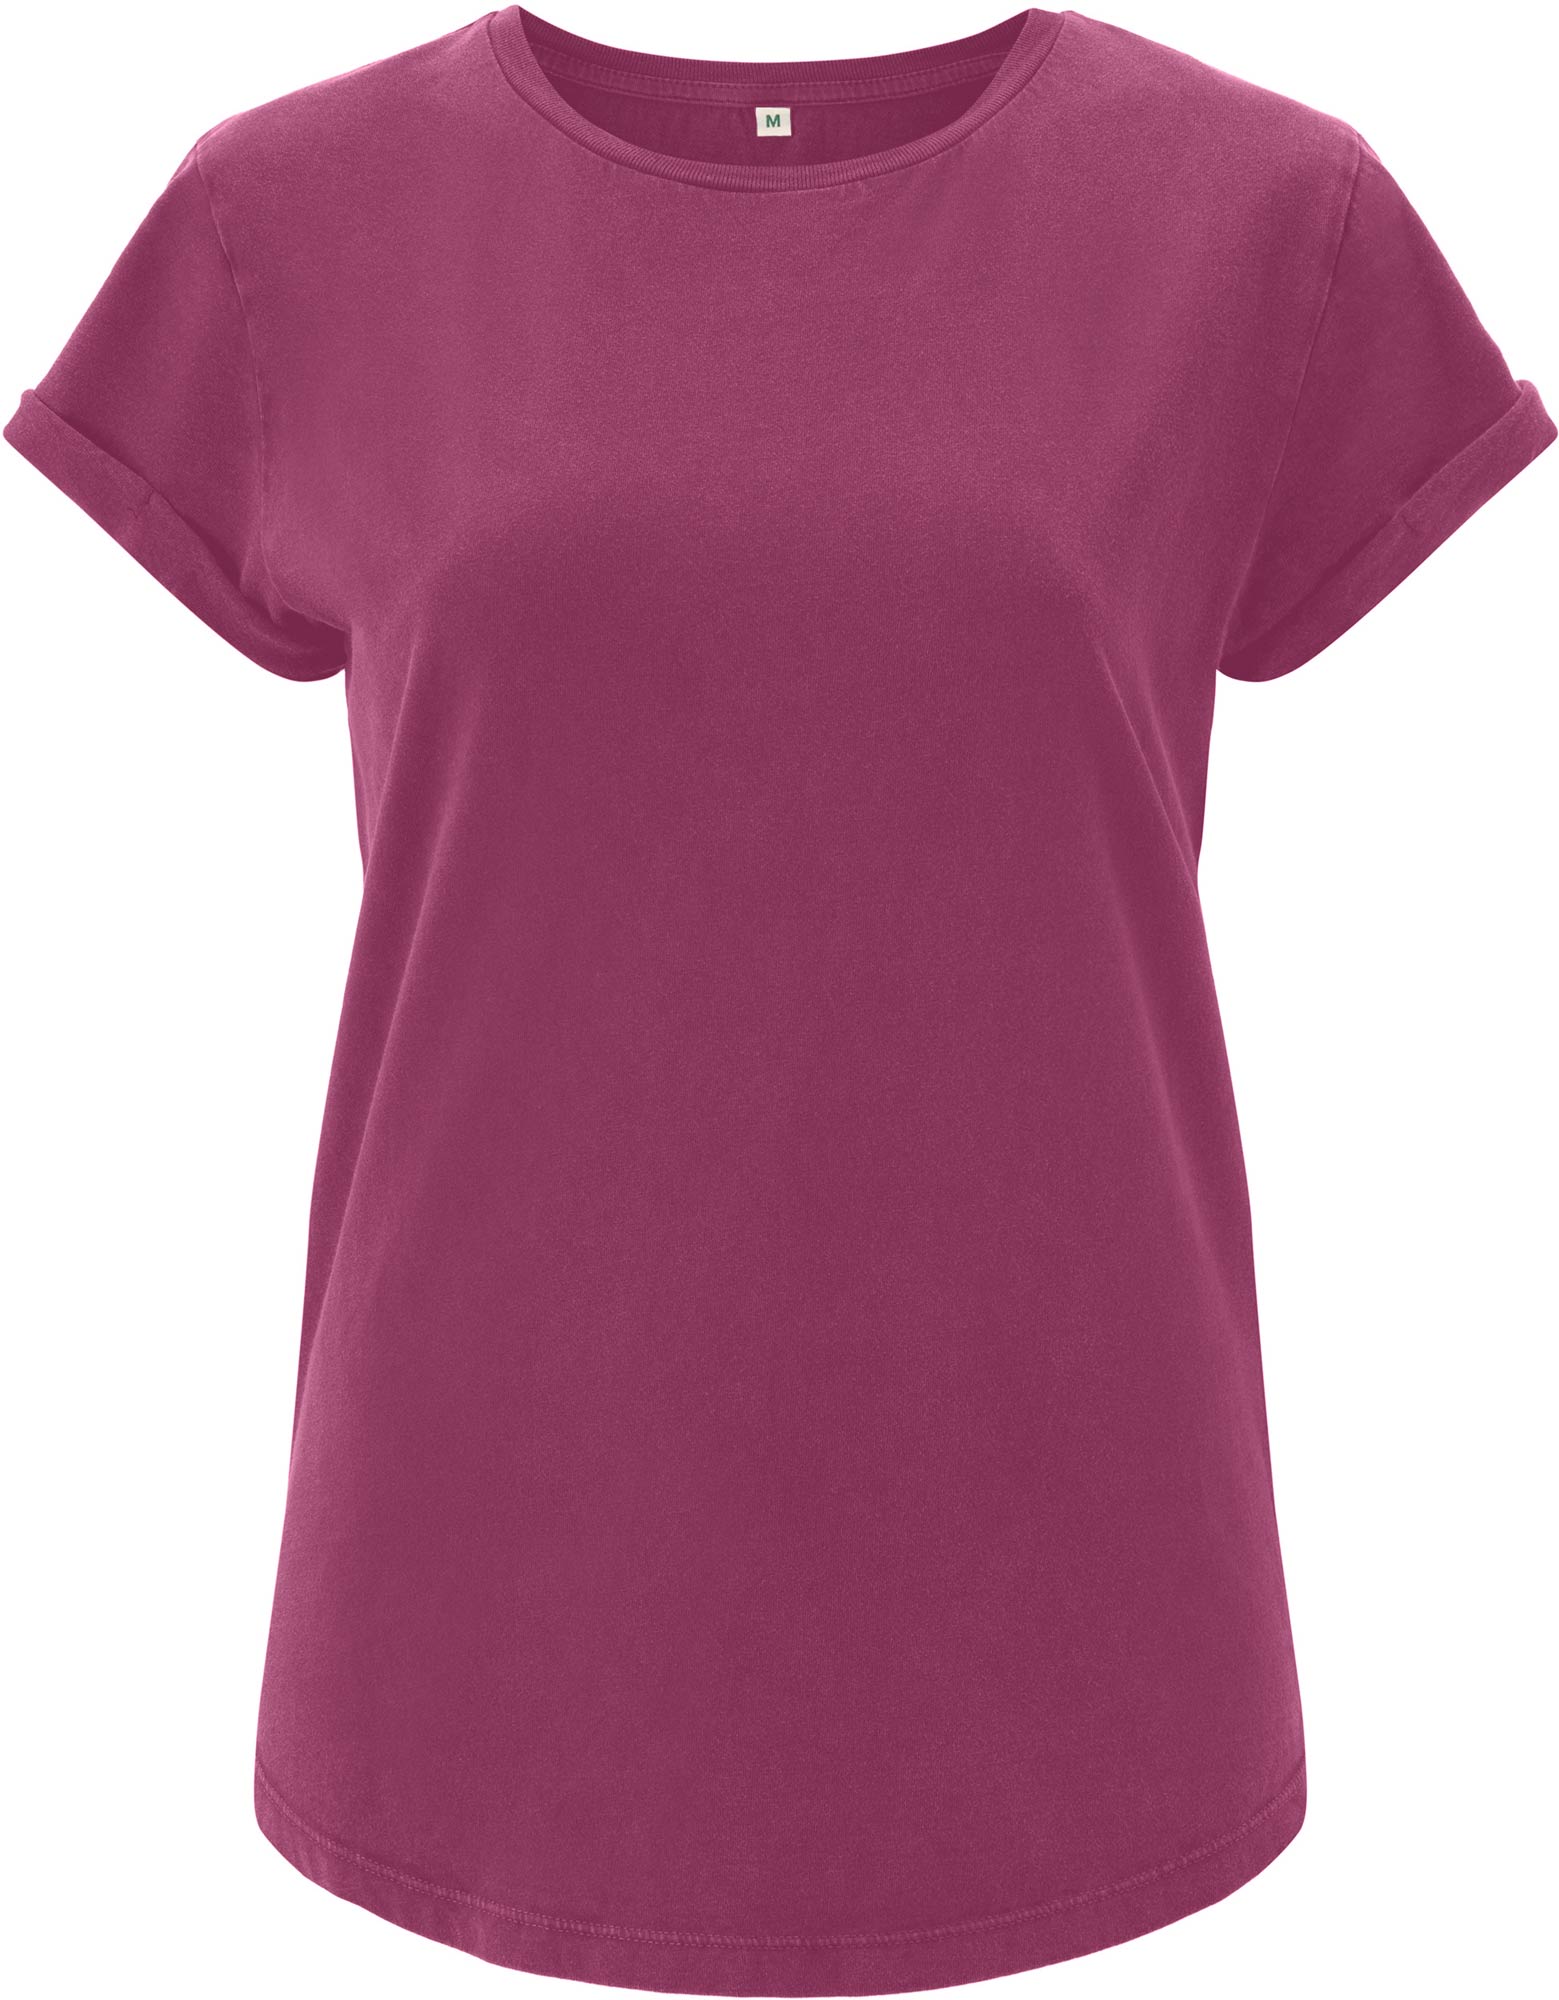 Rolled Up Sleeve T-Shirt Damen Bio-Baumwolle - berry